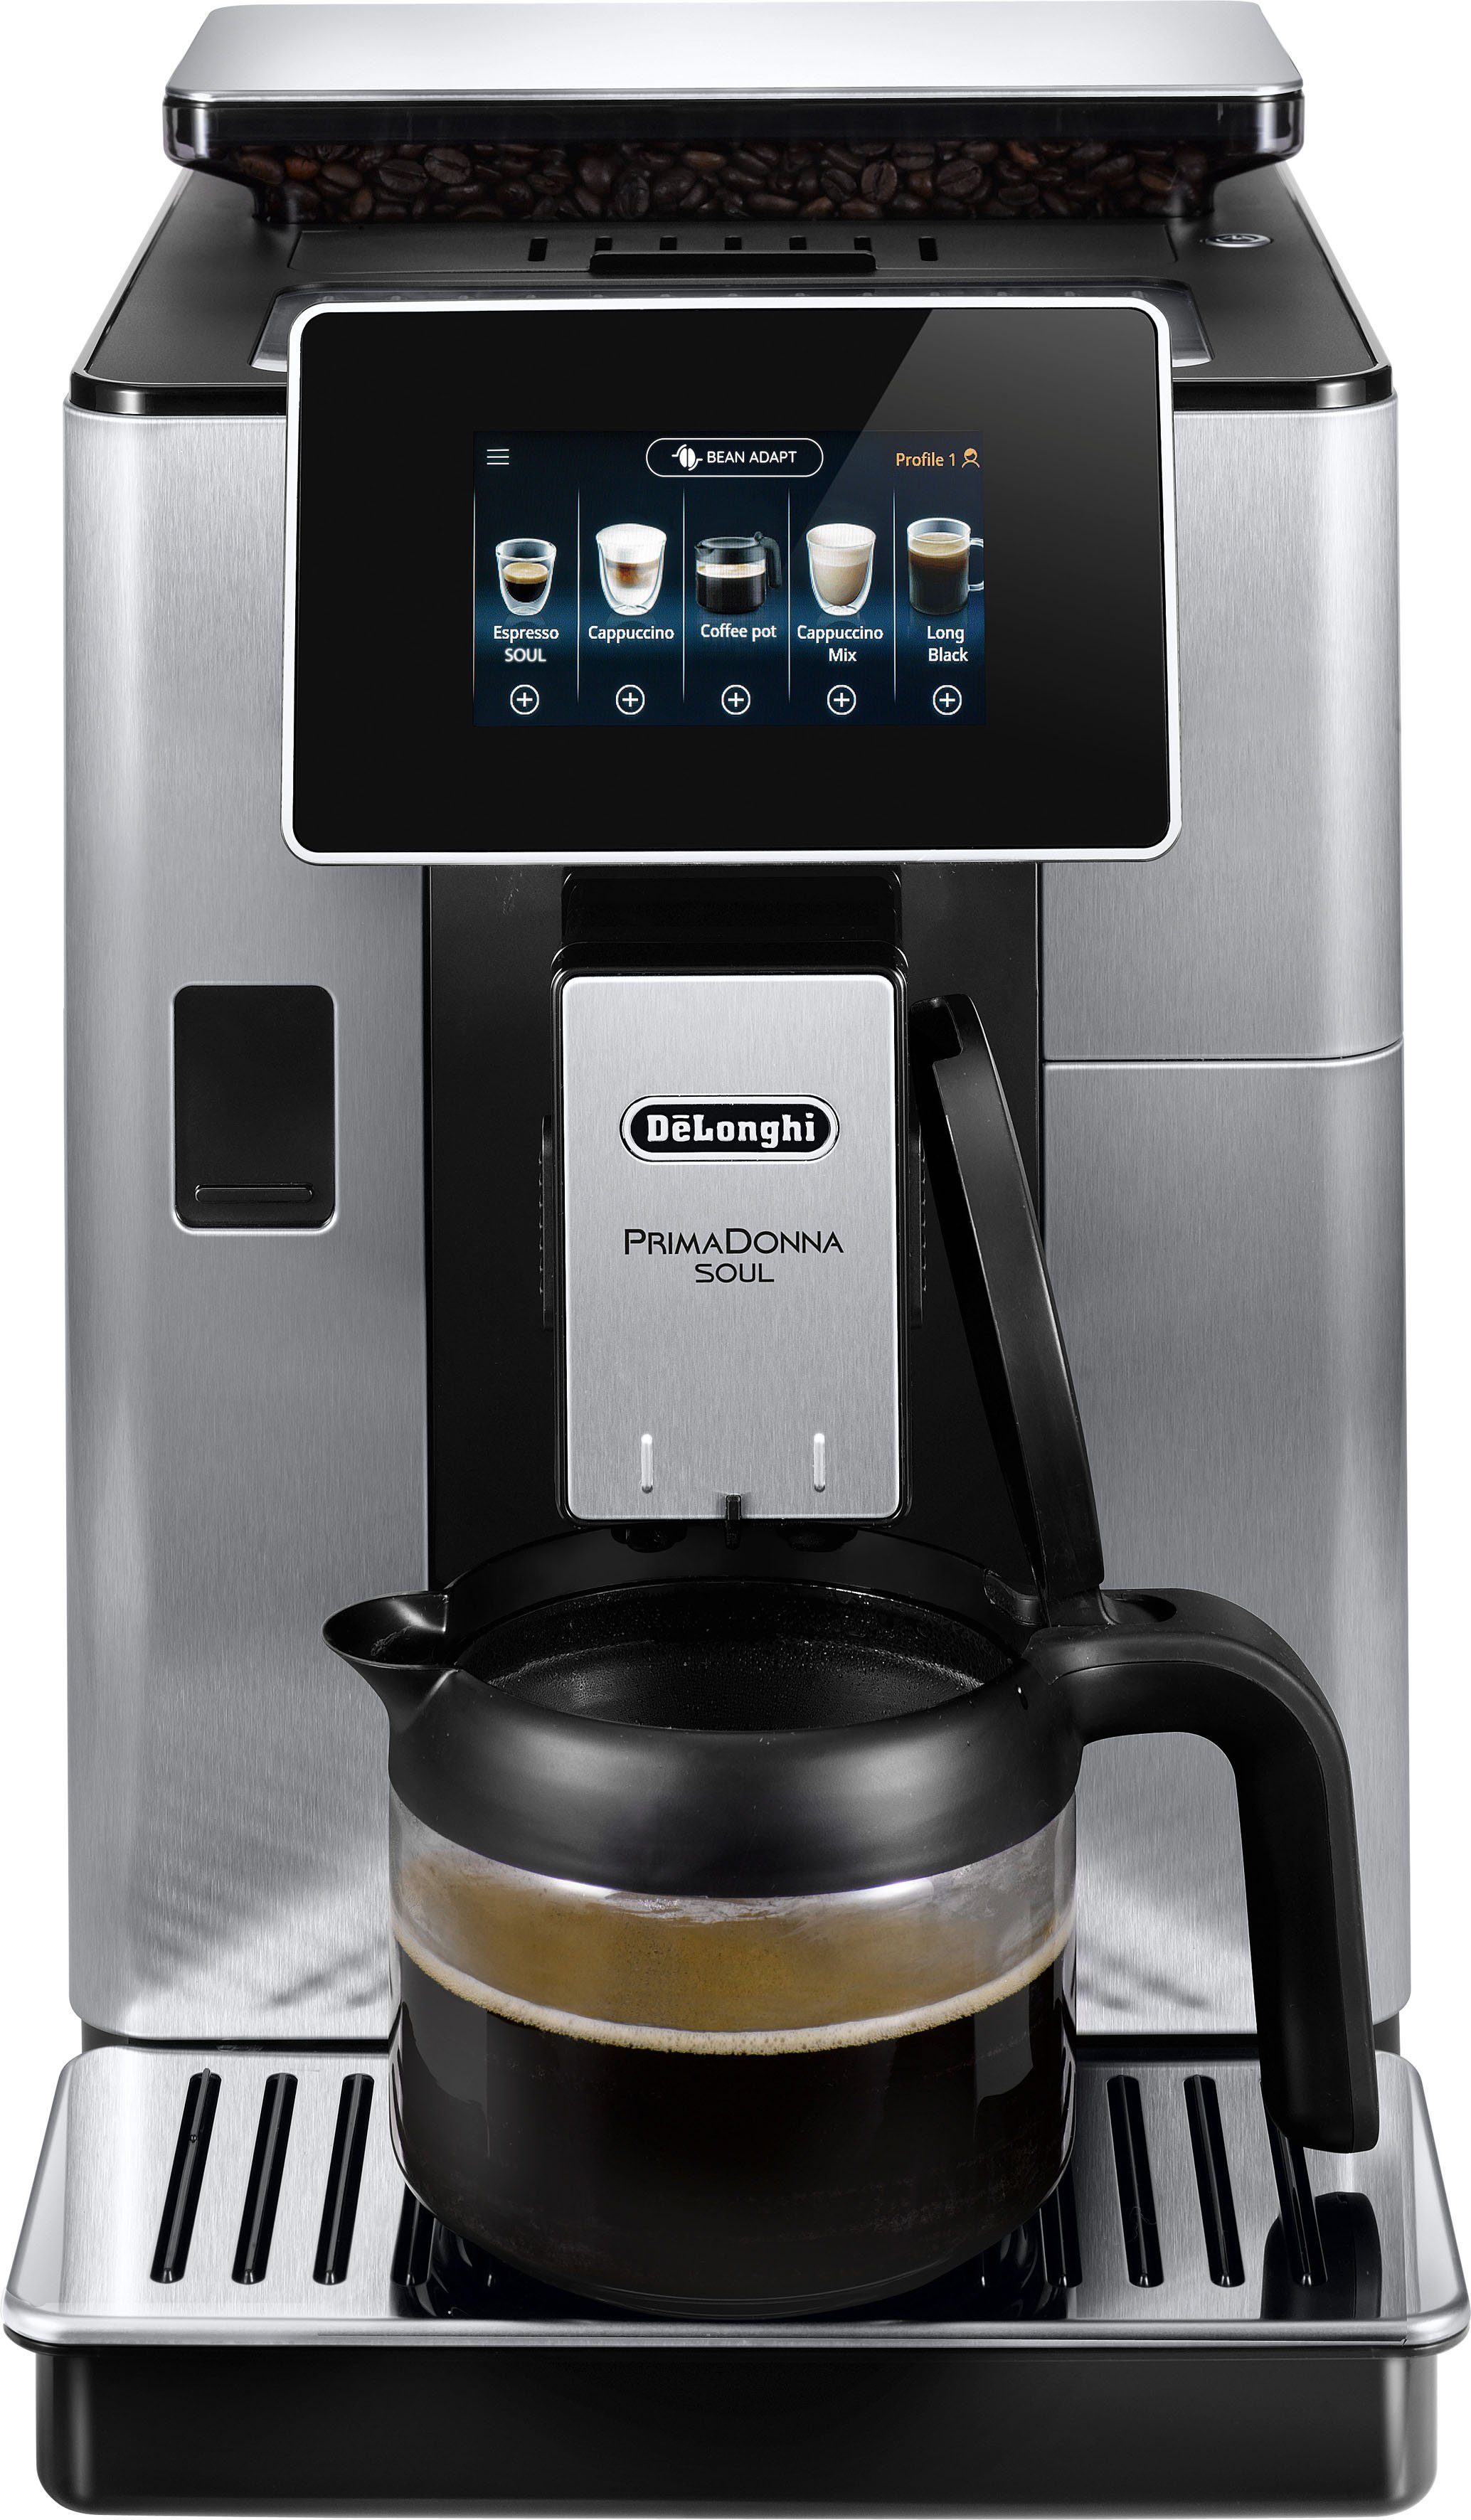 ECAM 29,99 im De'Longhi € UVP Gläser-Set 610.75.MB, inkl. 46,90 Soul Kaffeevollautomat von + UVP Wert PrimaDonna Kaffeekanne €